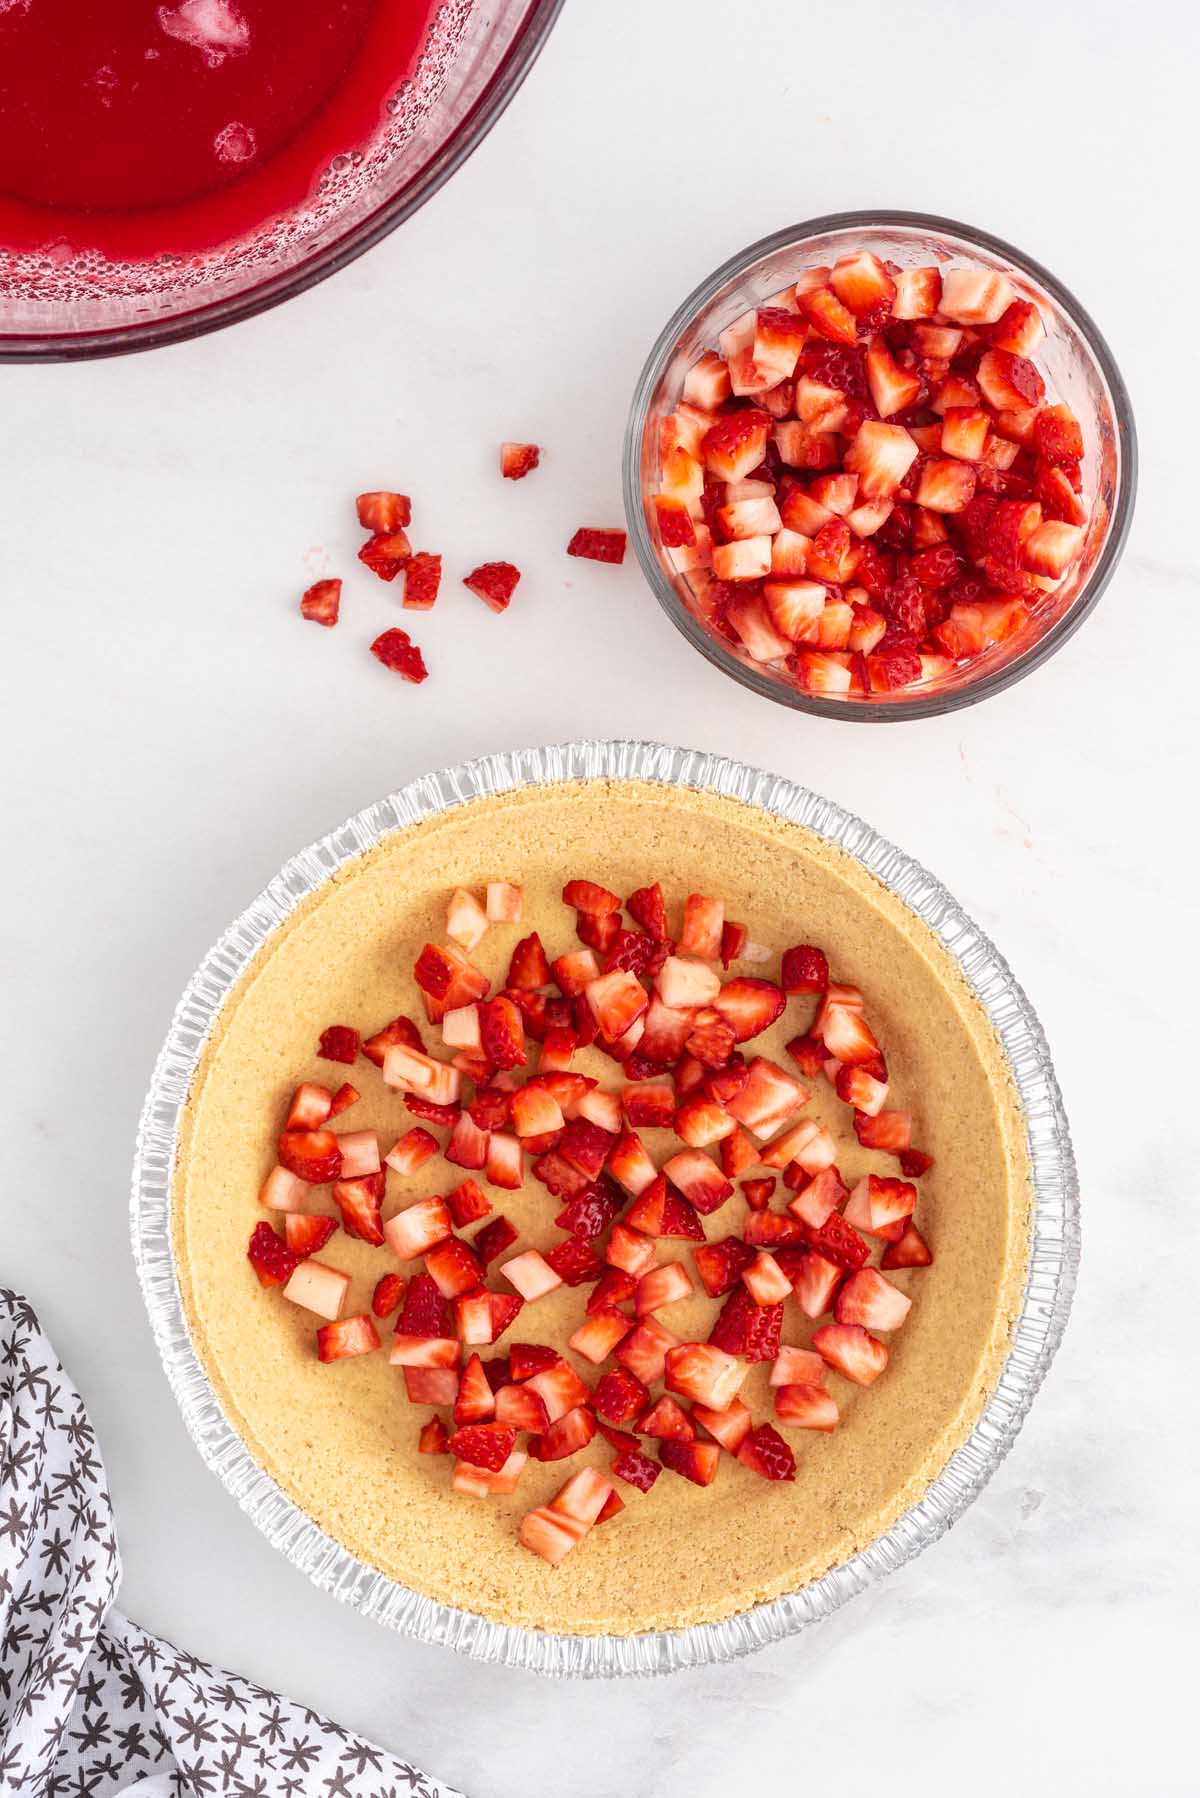 sprinkle strawberry into the pie crust